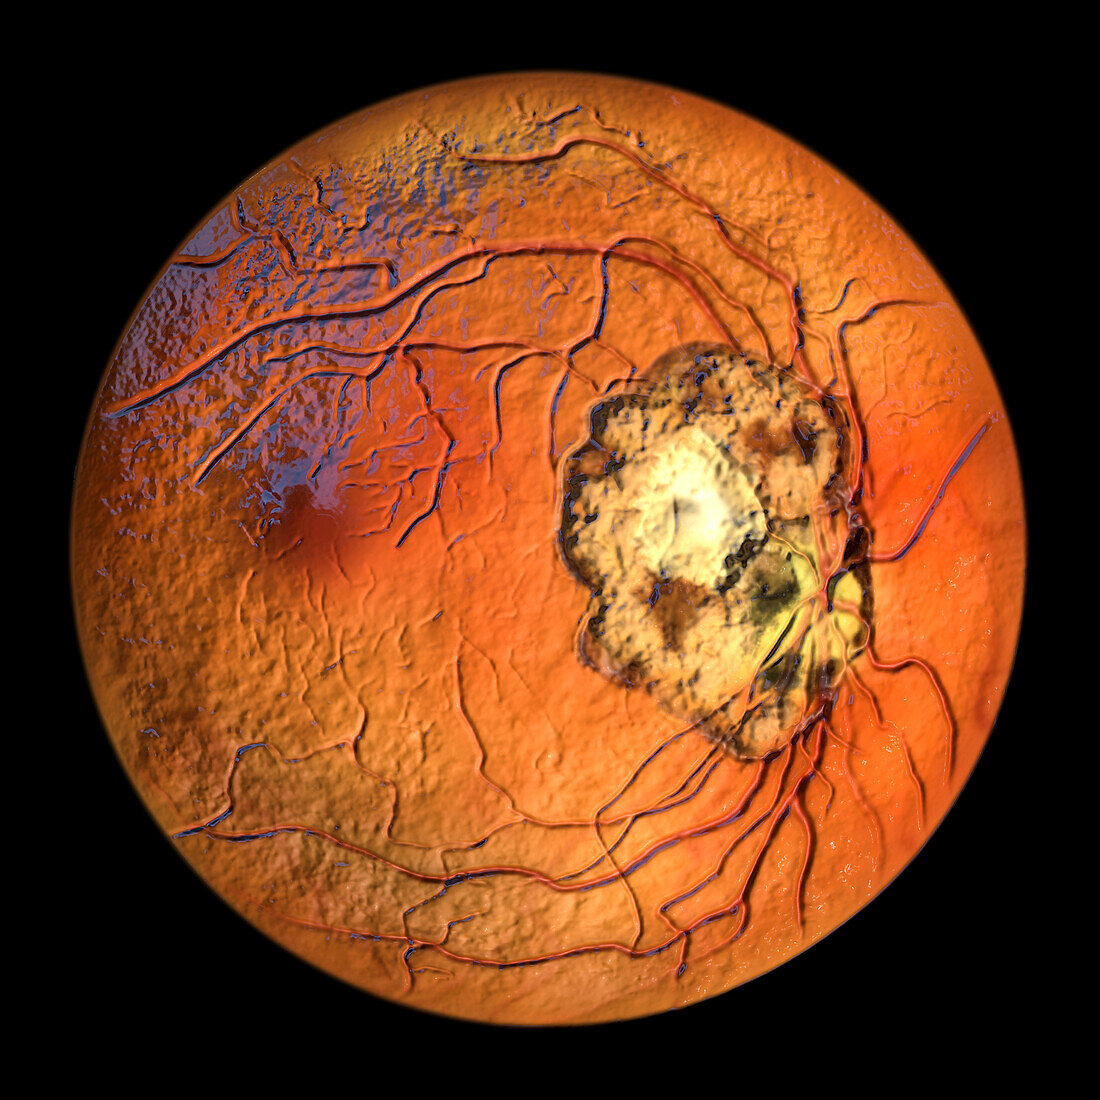 Retinal scar caused by toxoplasmosis, illustration